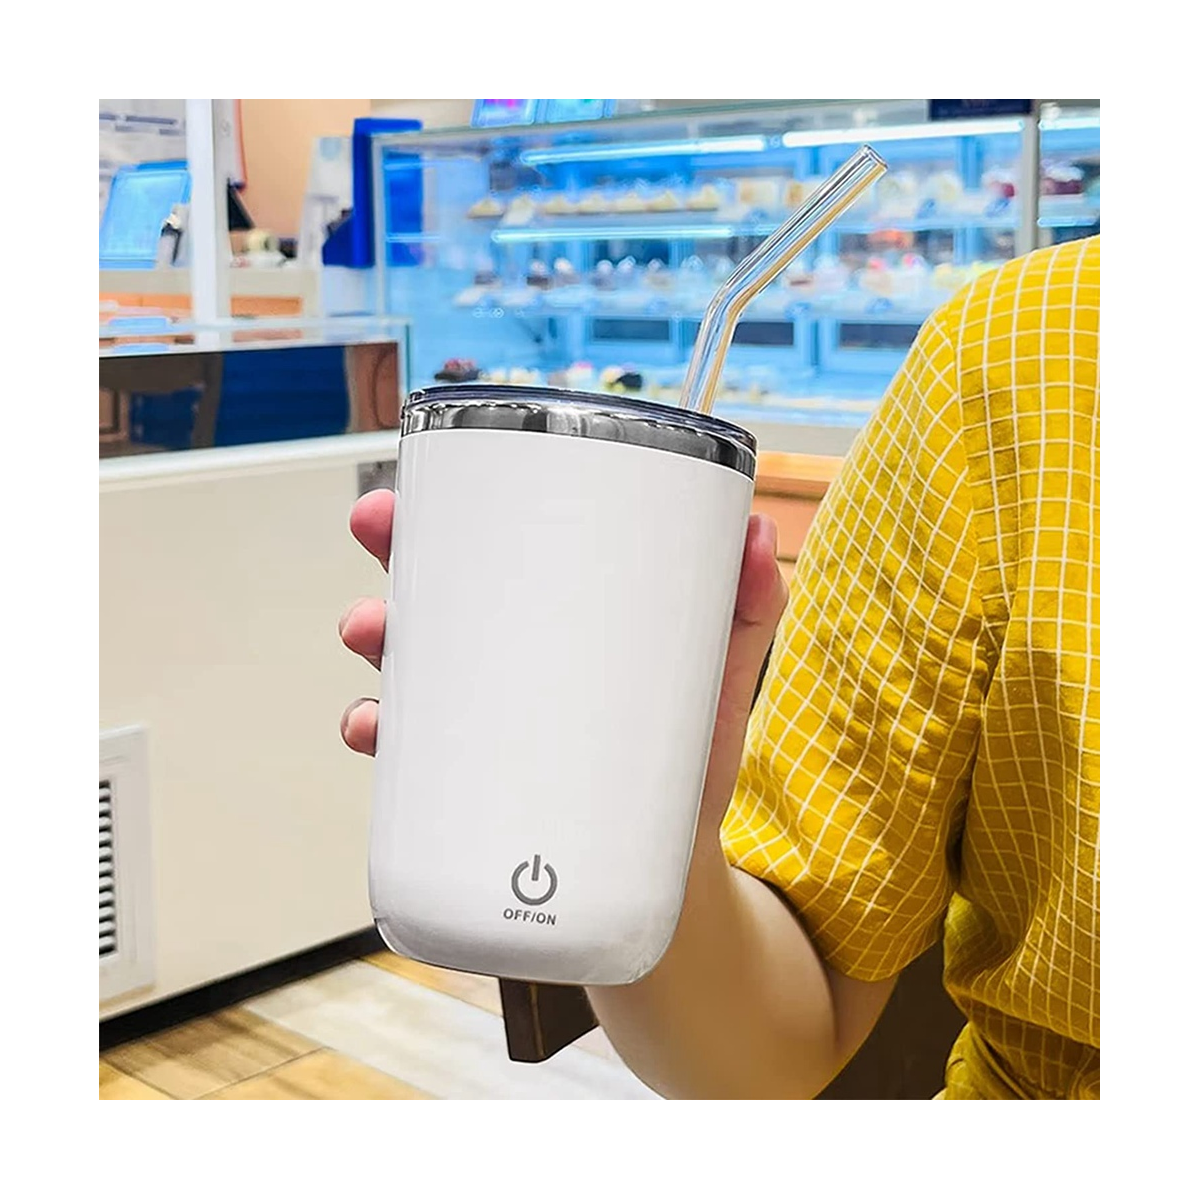 350ml Automatic Self Stirring Mug Coffee Milk Juice Mixing Cup Electri –  Glamping's Lady